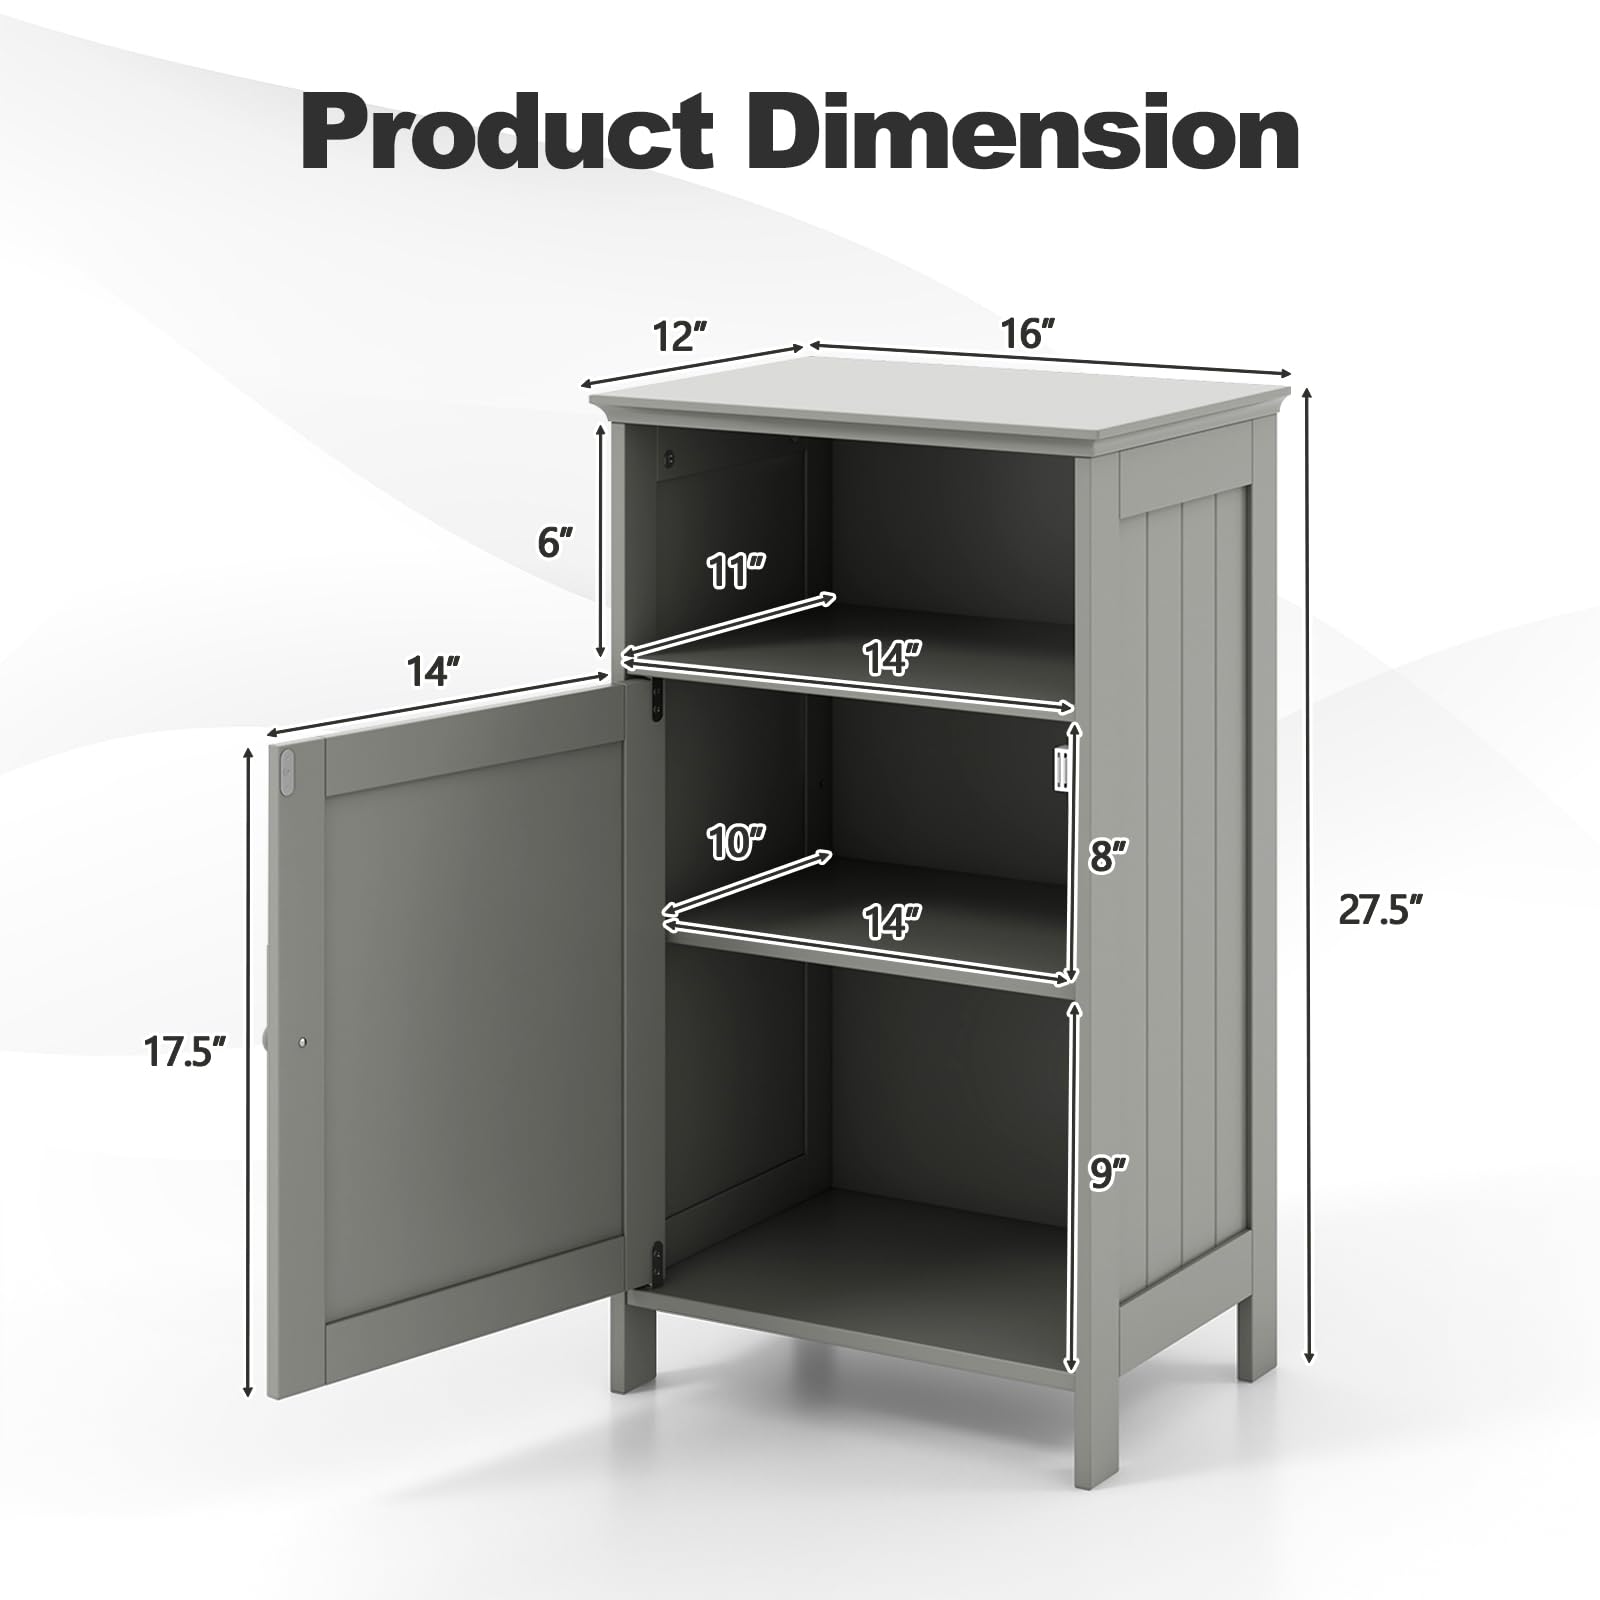 Giantex Bathroom Floor Storage Cabinet - Side Cabinet with Open Compartment, 3-Position Adjustable Shelf